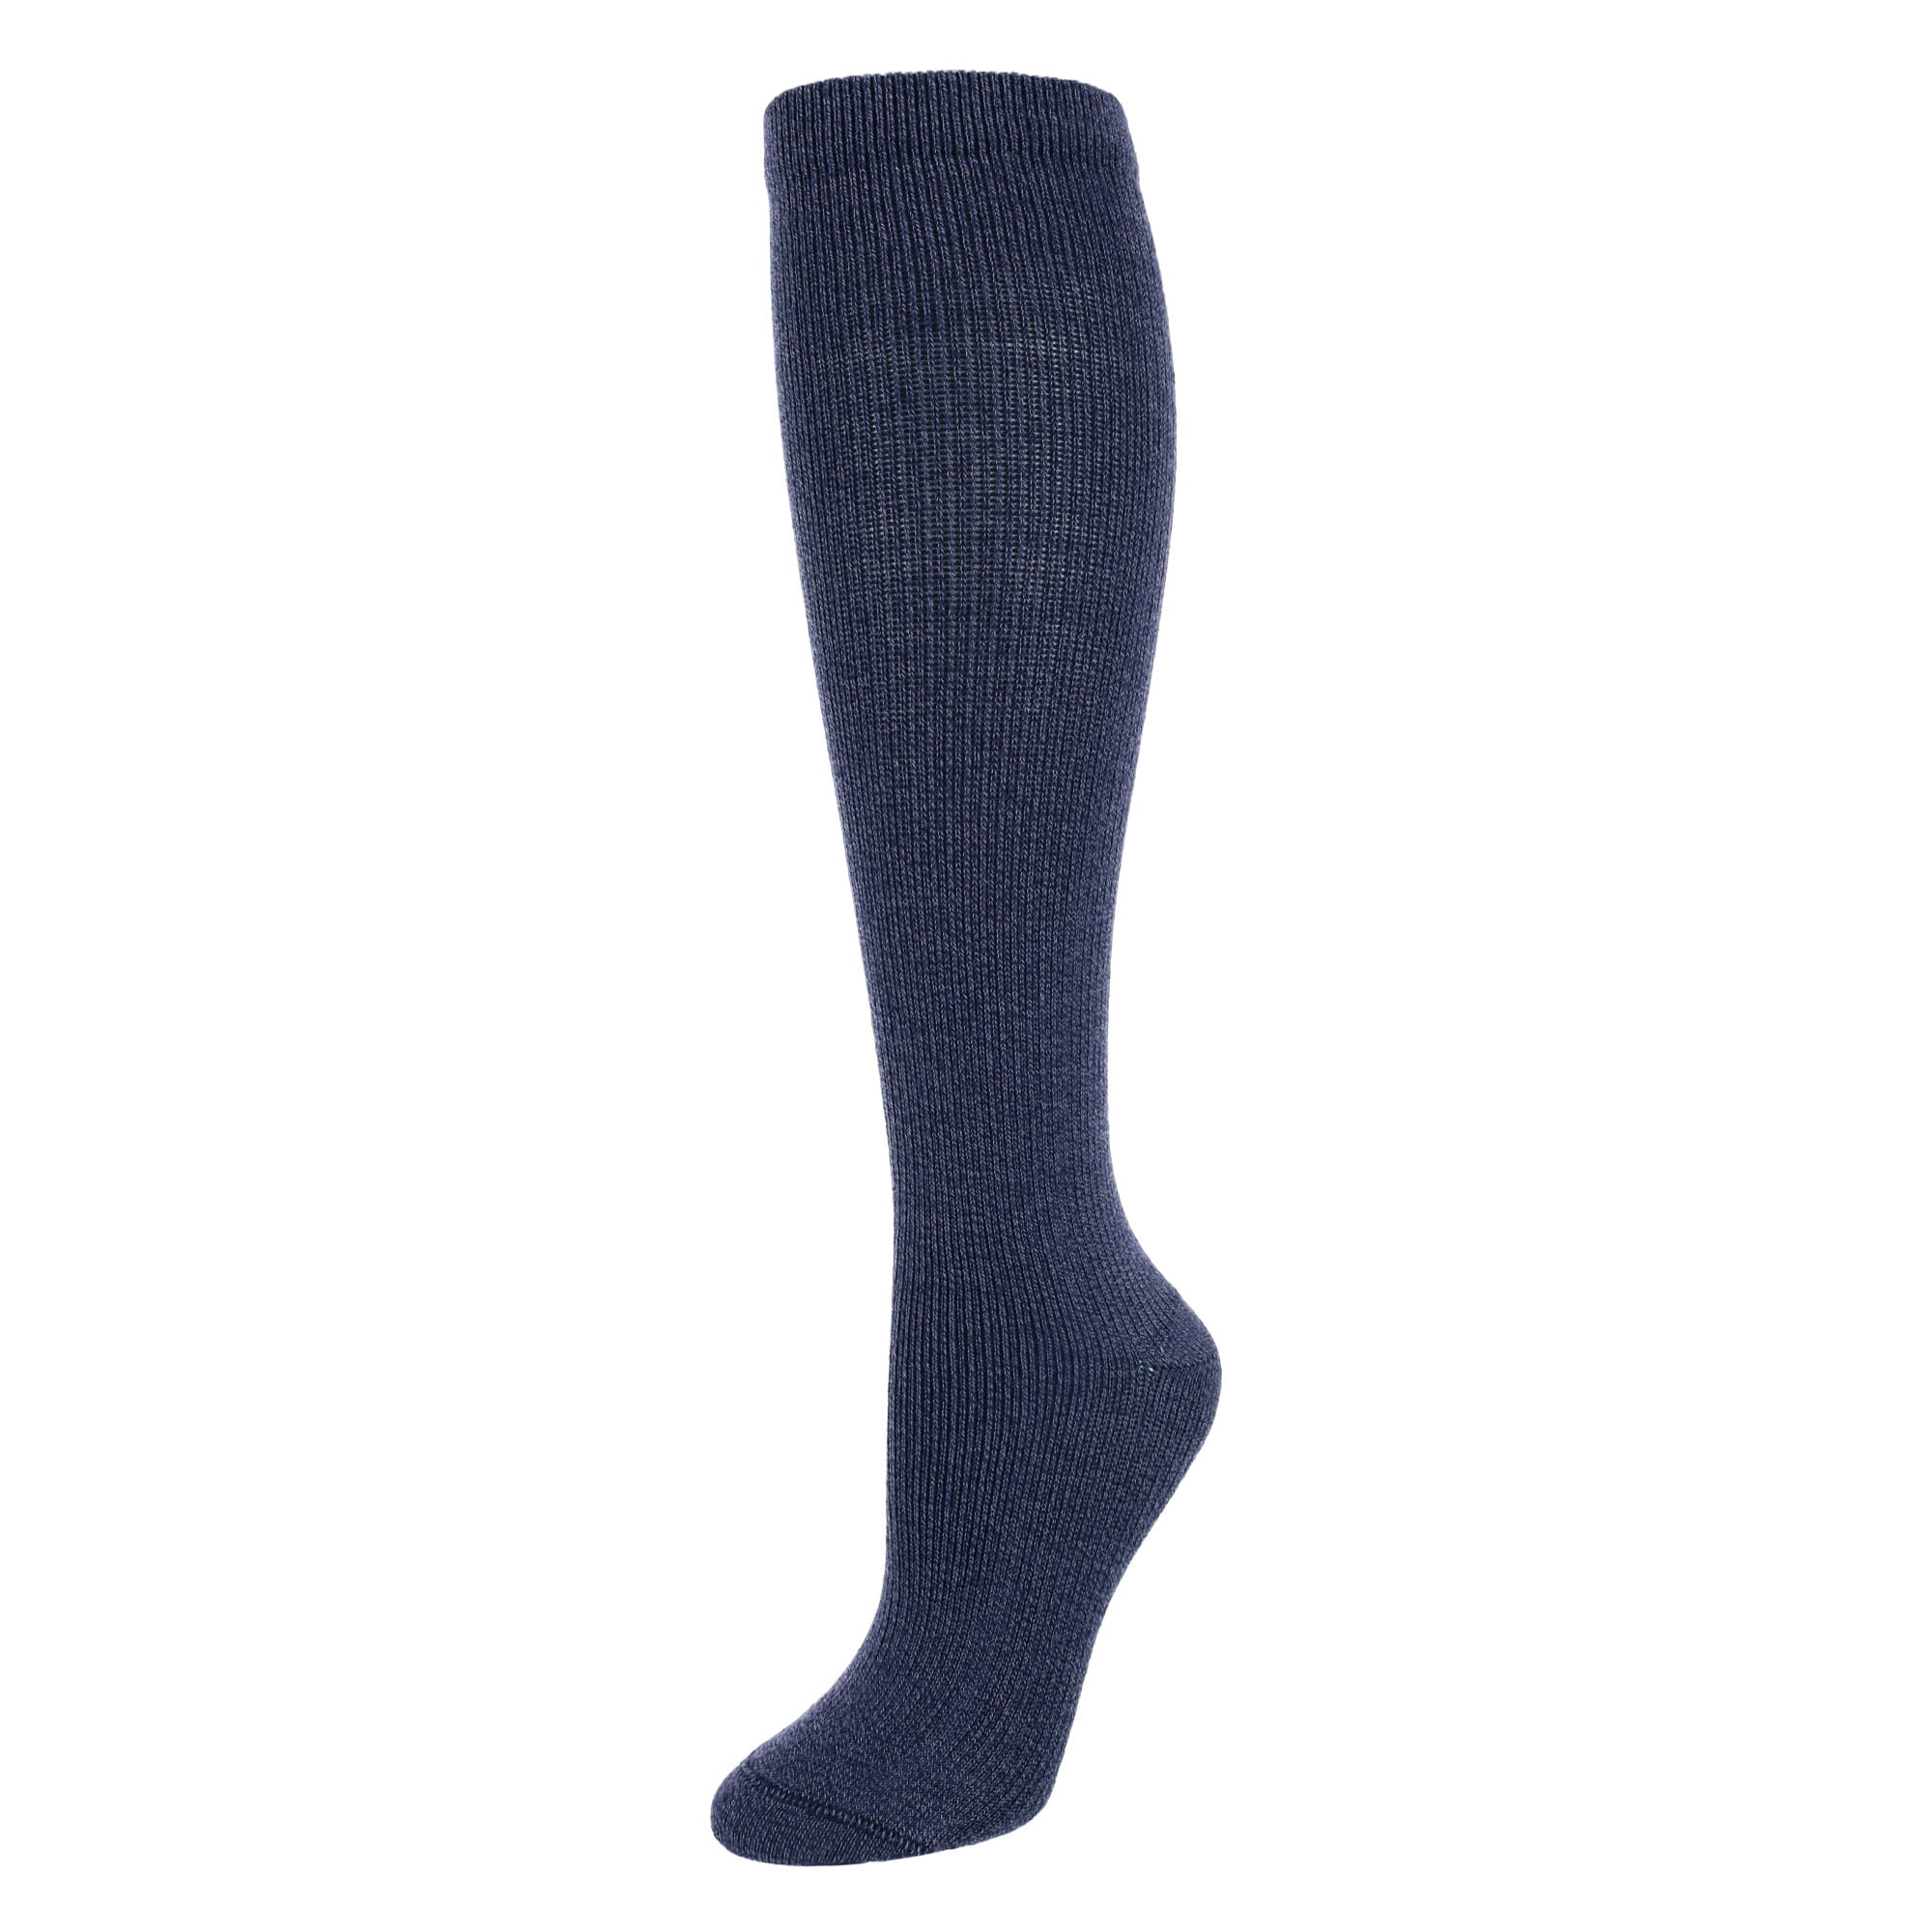 Dr Scholls Women's Marled Knee High Compression Socks | Walmart Canada